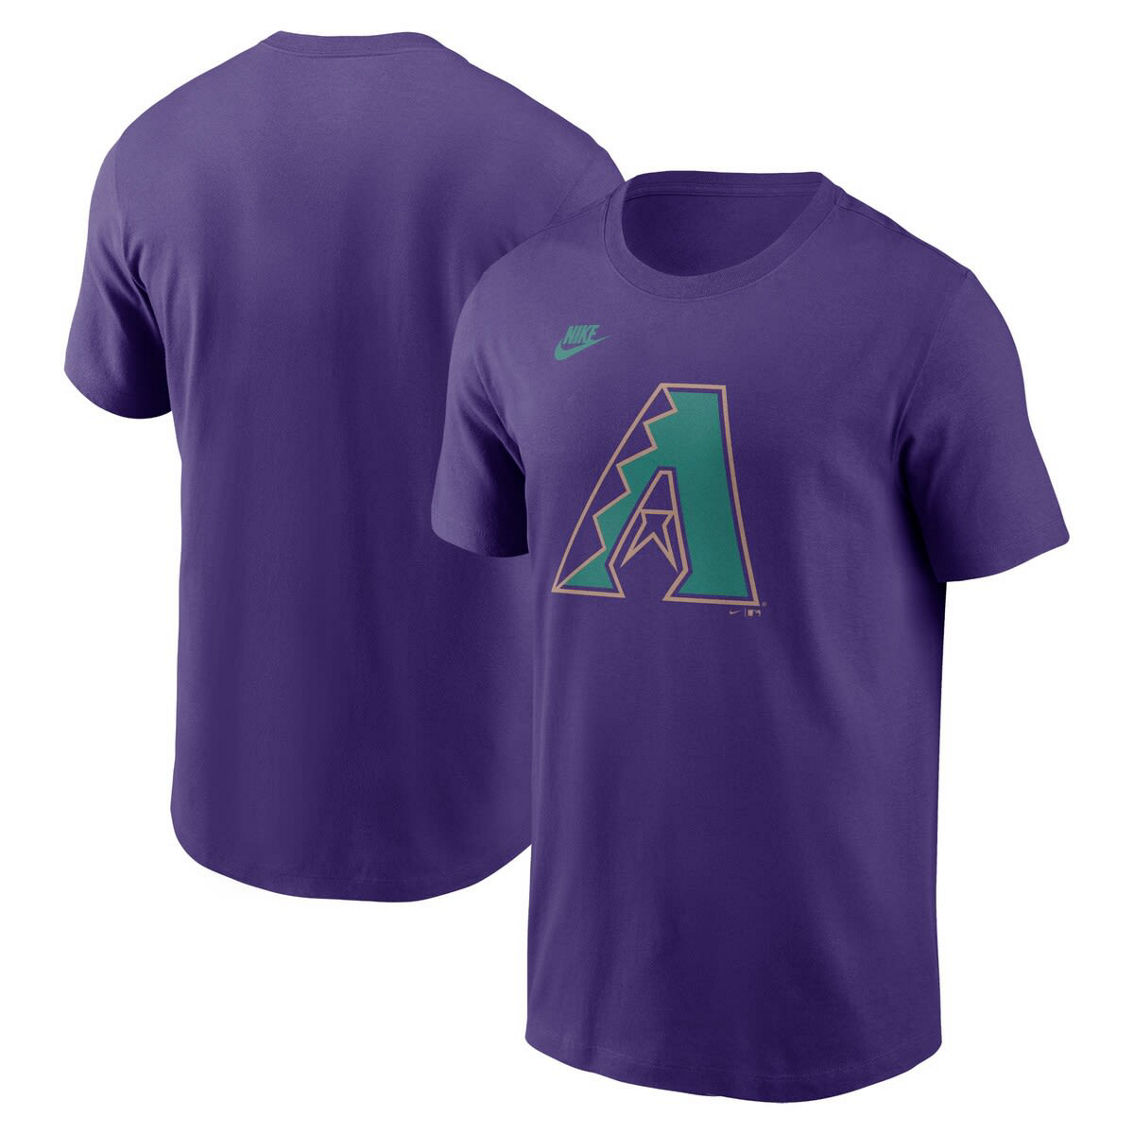 Nike Men's Purple Arizona Diamondbacks Cooperstown Collection Team Logo T-Shirt - Image 2 of 2